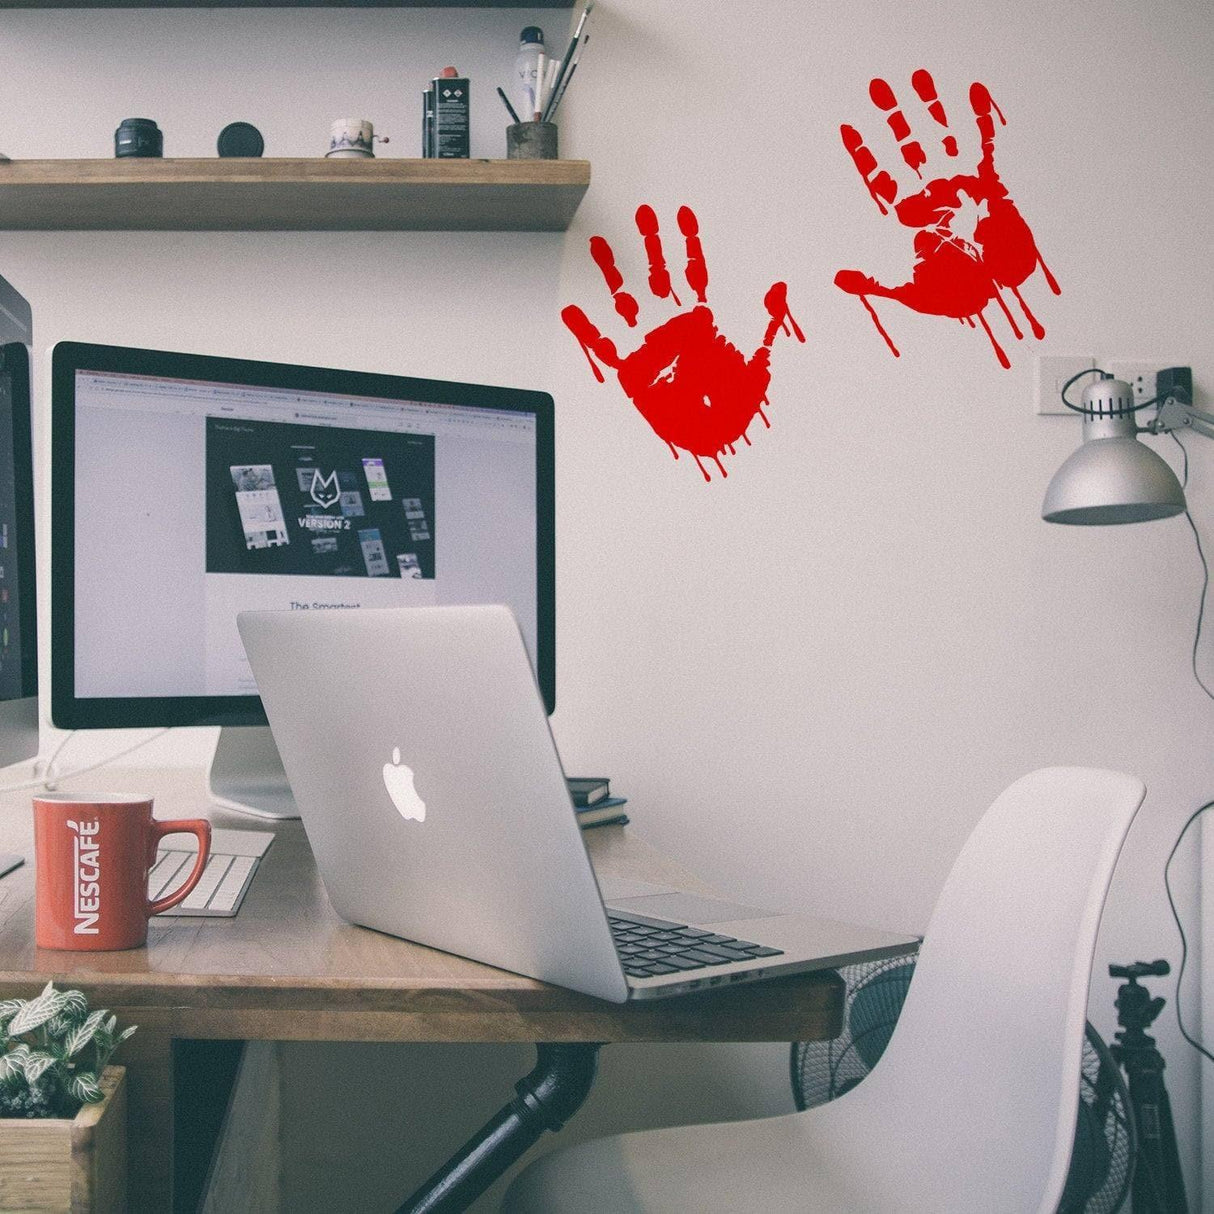 Bloody Hands Scary Red Vinyl Sticker - Zombie Blood Car Wall Laptop Window Halloween Decal Print - Vampire Bumper Horror Slimy Bleeding Sign - Decords